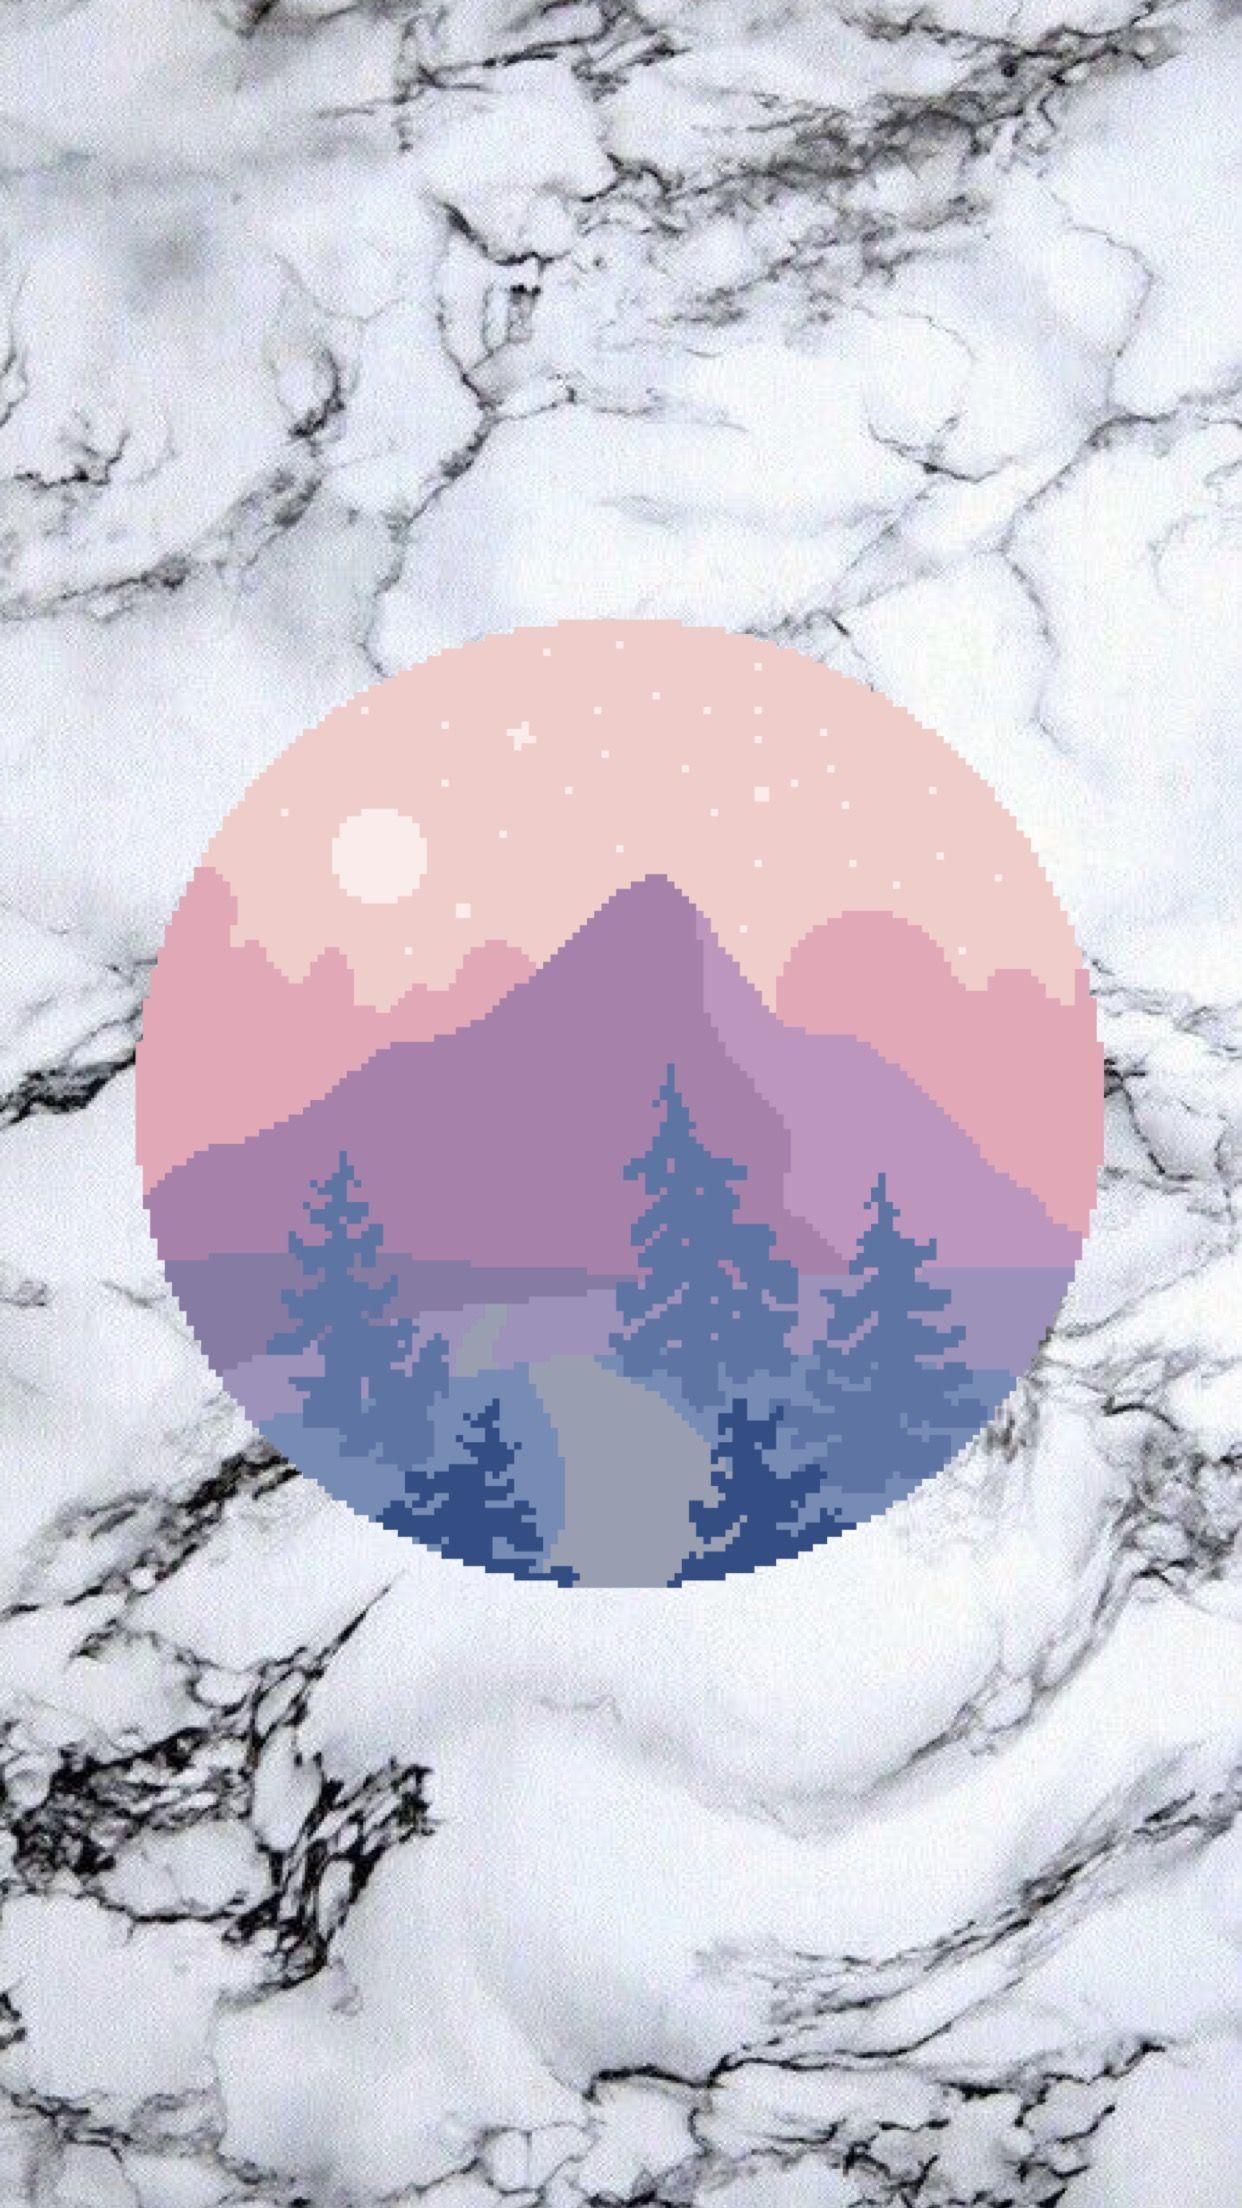 Moon mountain wallpaper. made by Laurette. instagram